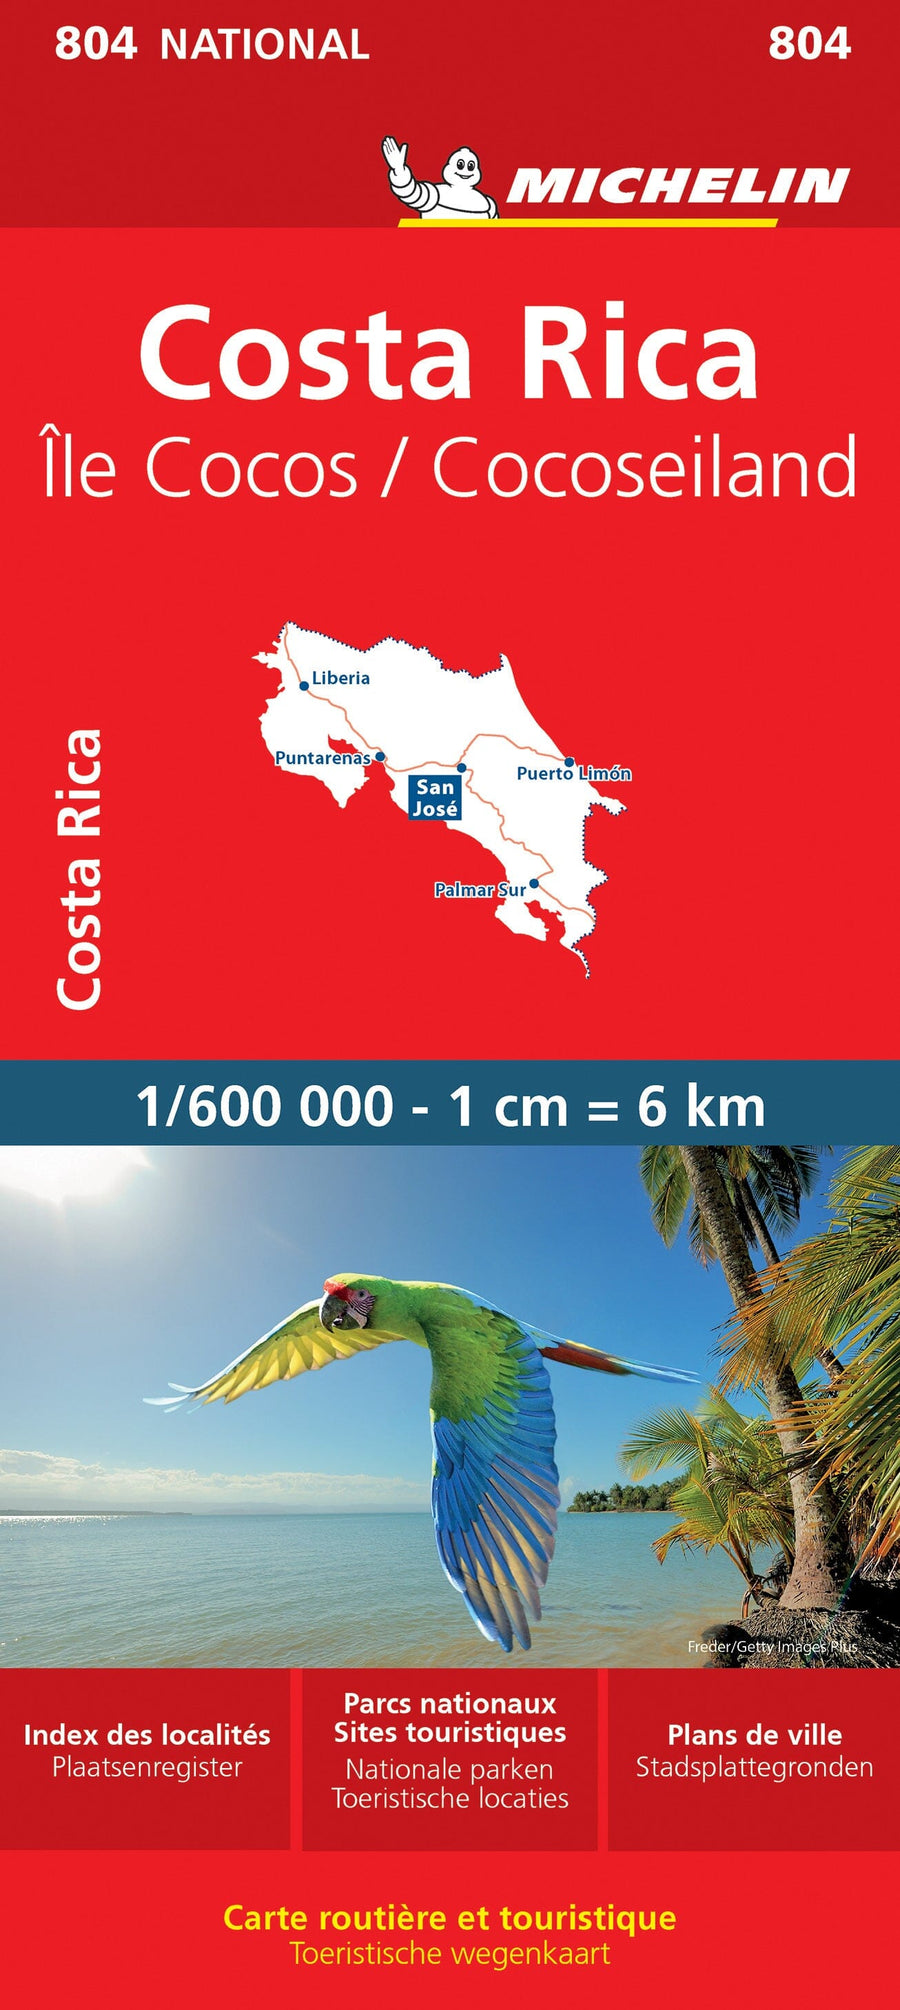 Carte routière n° 804 - Costa Rica | Michelin carte pliée Michelin 